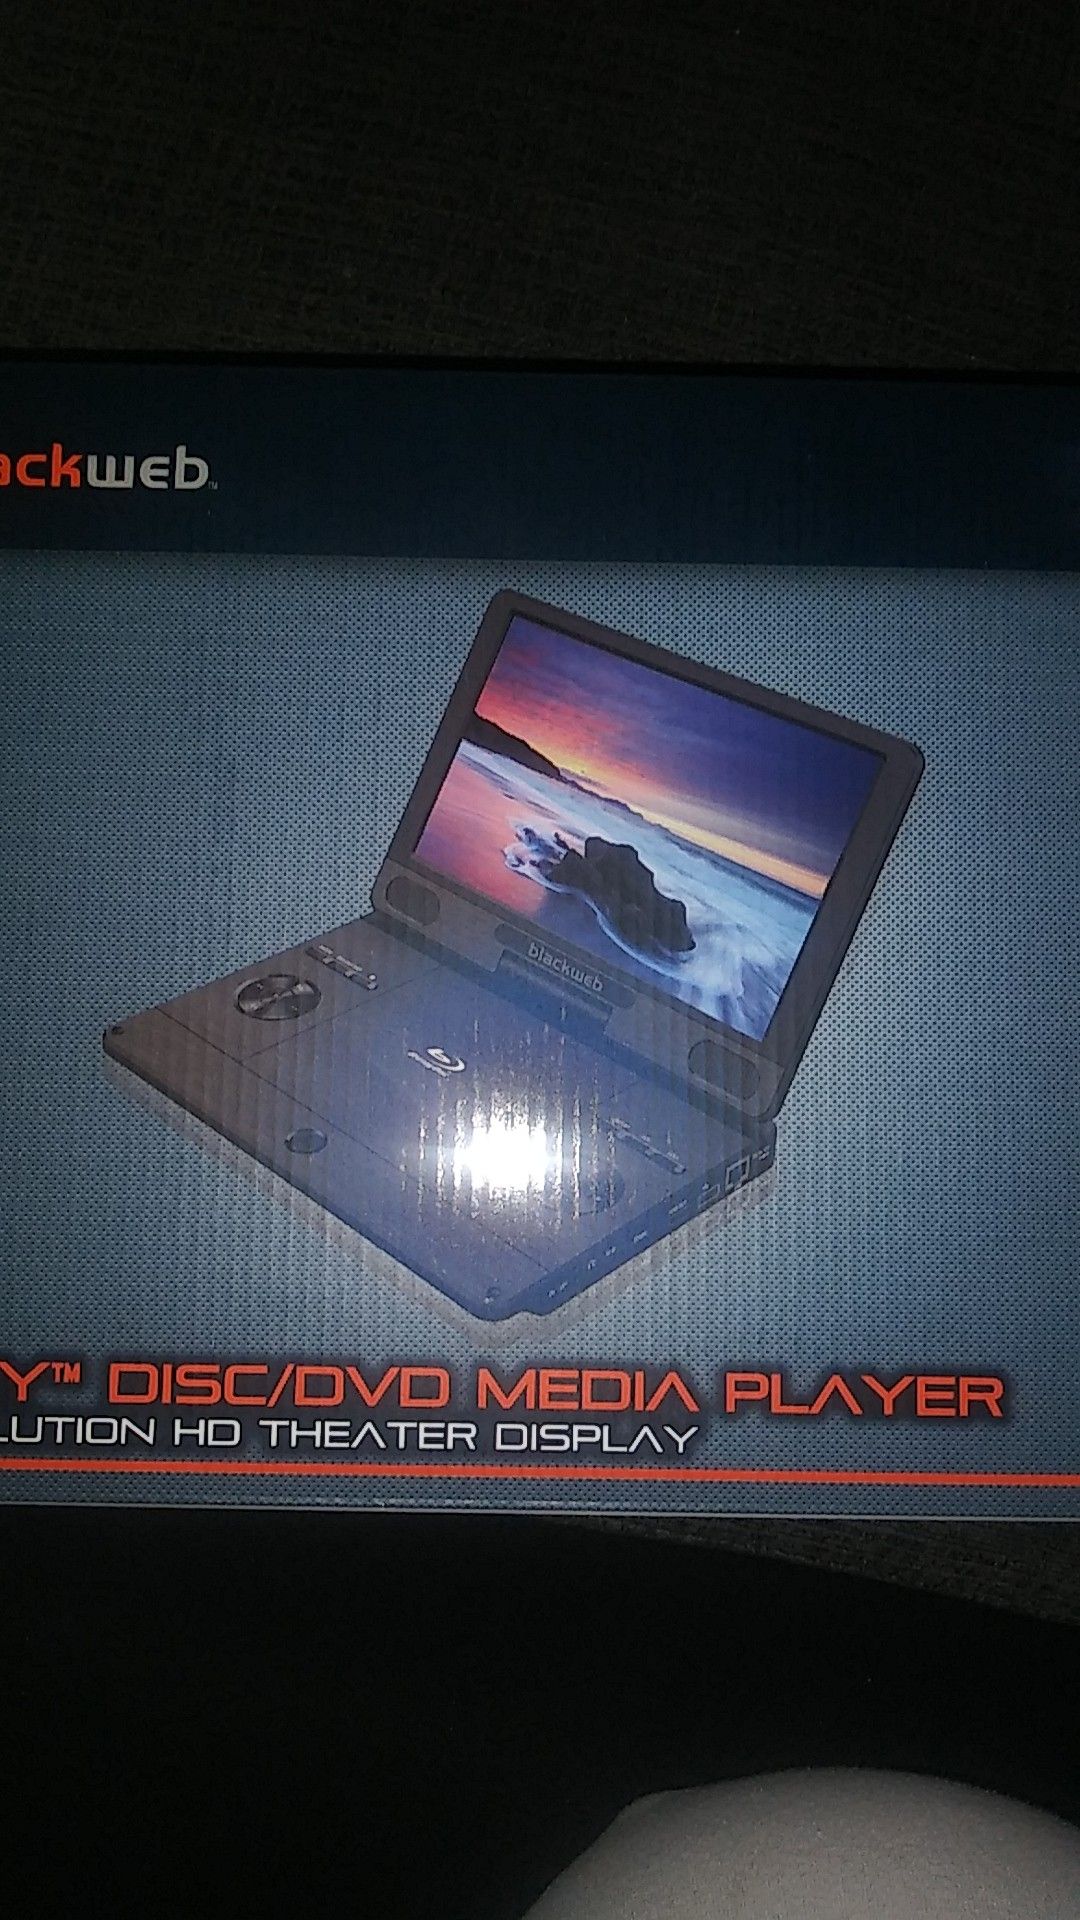 Portable bluray disc player